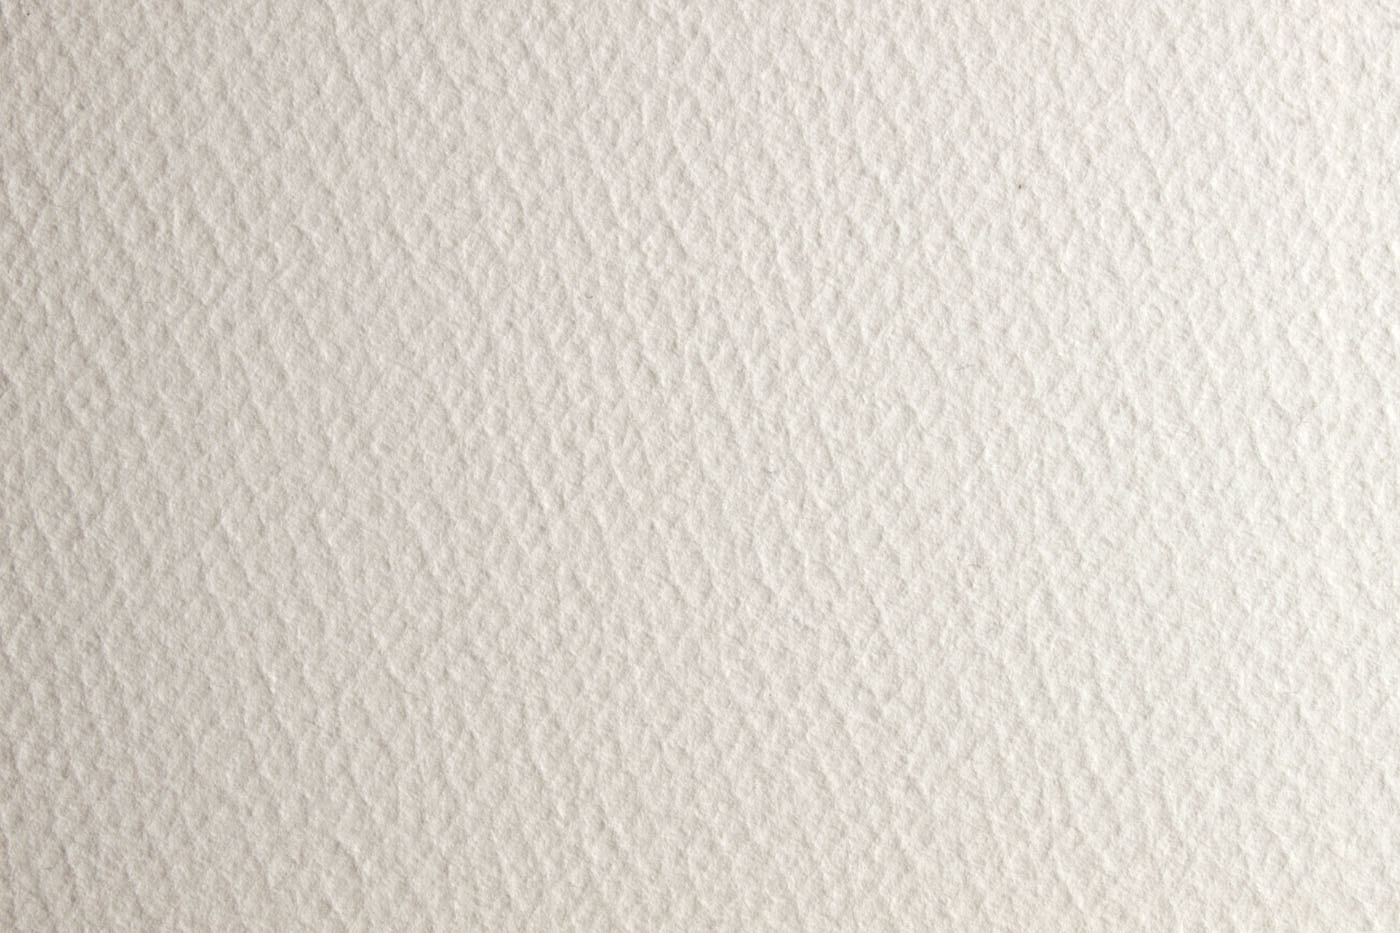 Бумага для акварели ARTISTICO TRADITIONAL WHITE 200г/кв.м 560х760мм grain fin (среднее зерно) хлопок 100% по 385.00 руб от Fabriano